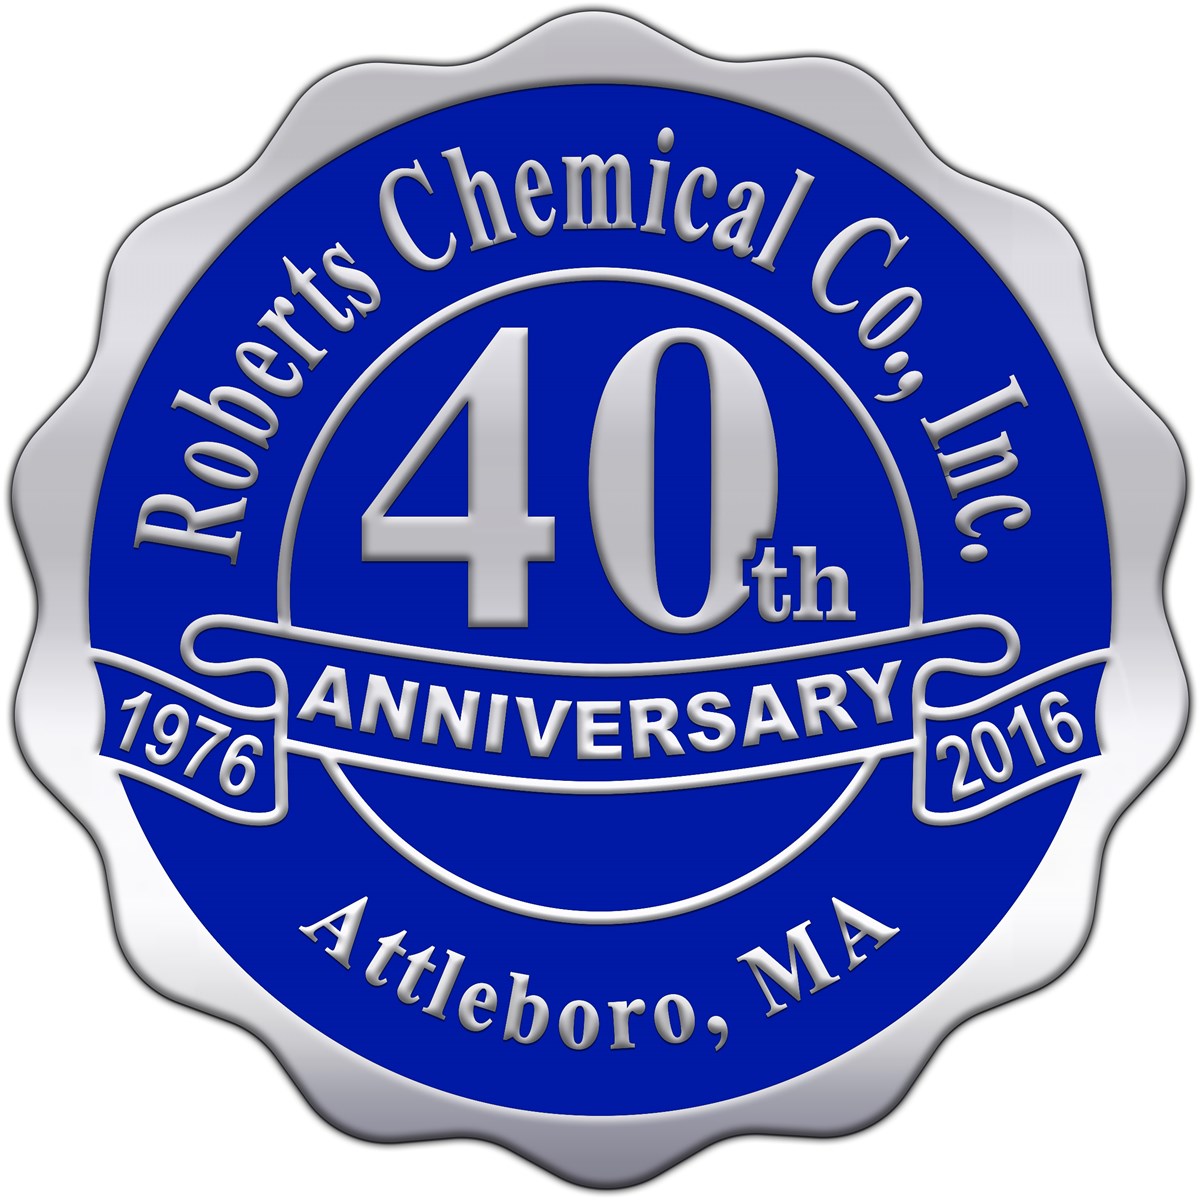 Roberts Chemical News